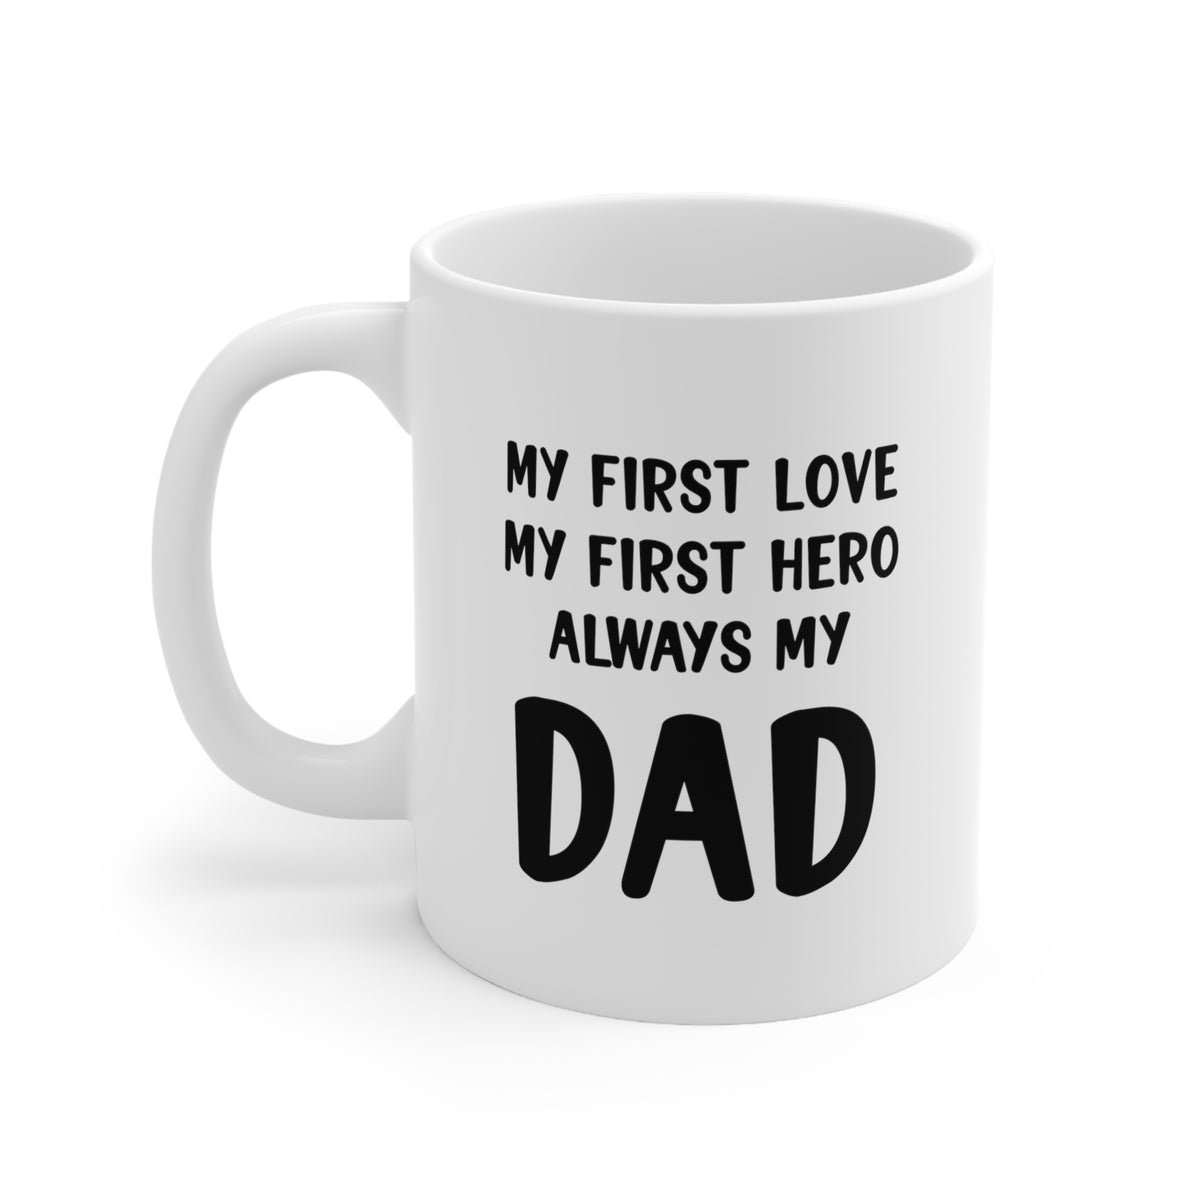 Funny Dad Coffee Mug, My First Love My First Hero Always My Dad, Father